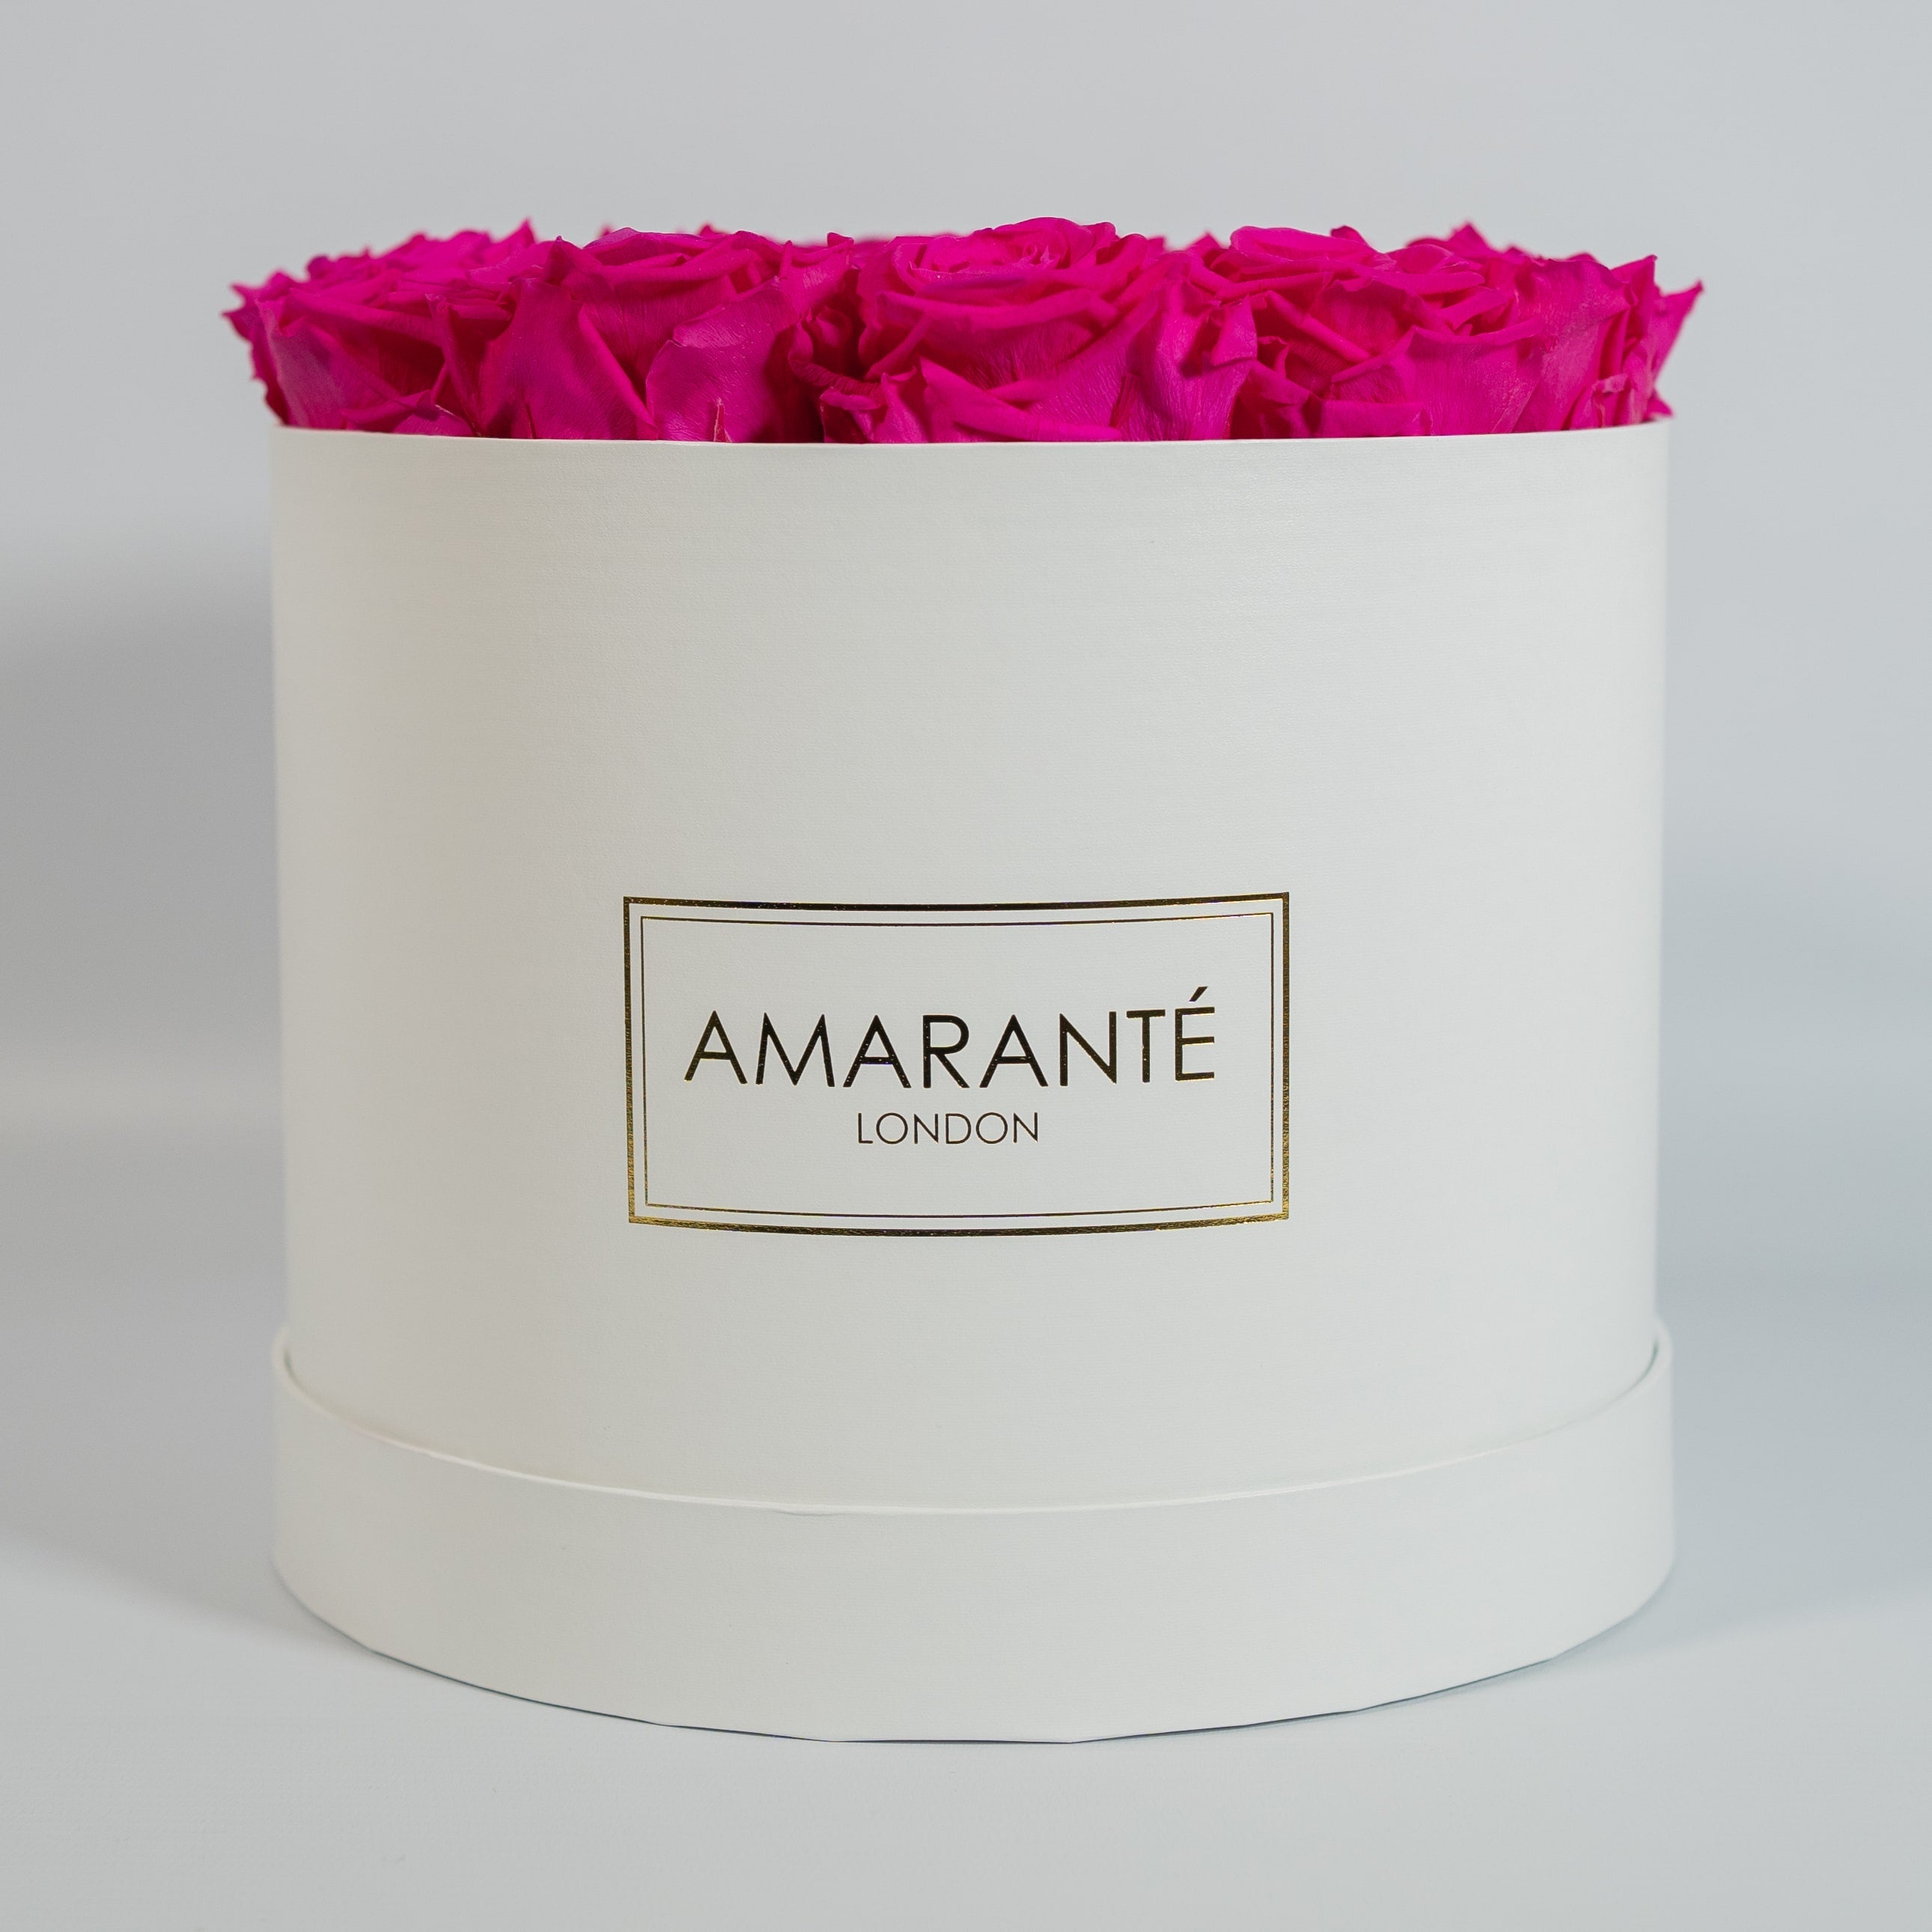 Expressive hot pink Roses featured in a dapper white box 